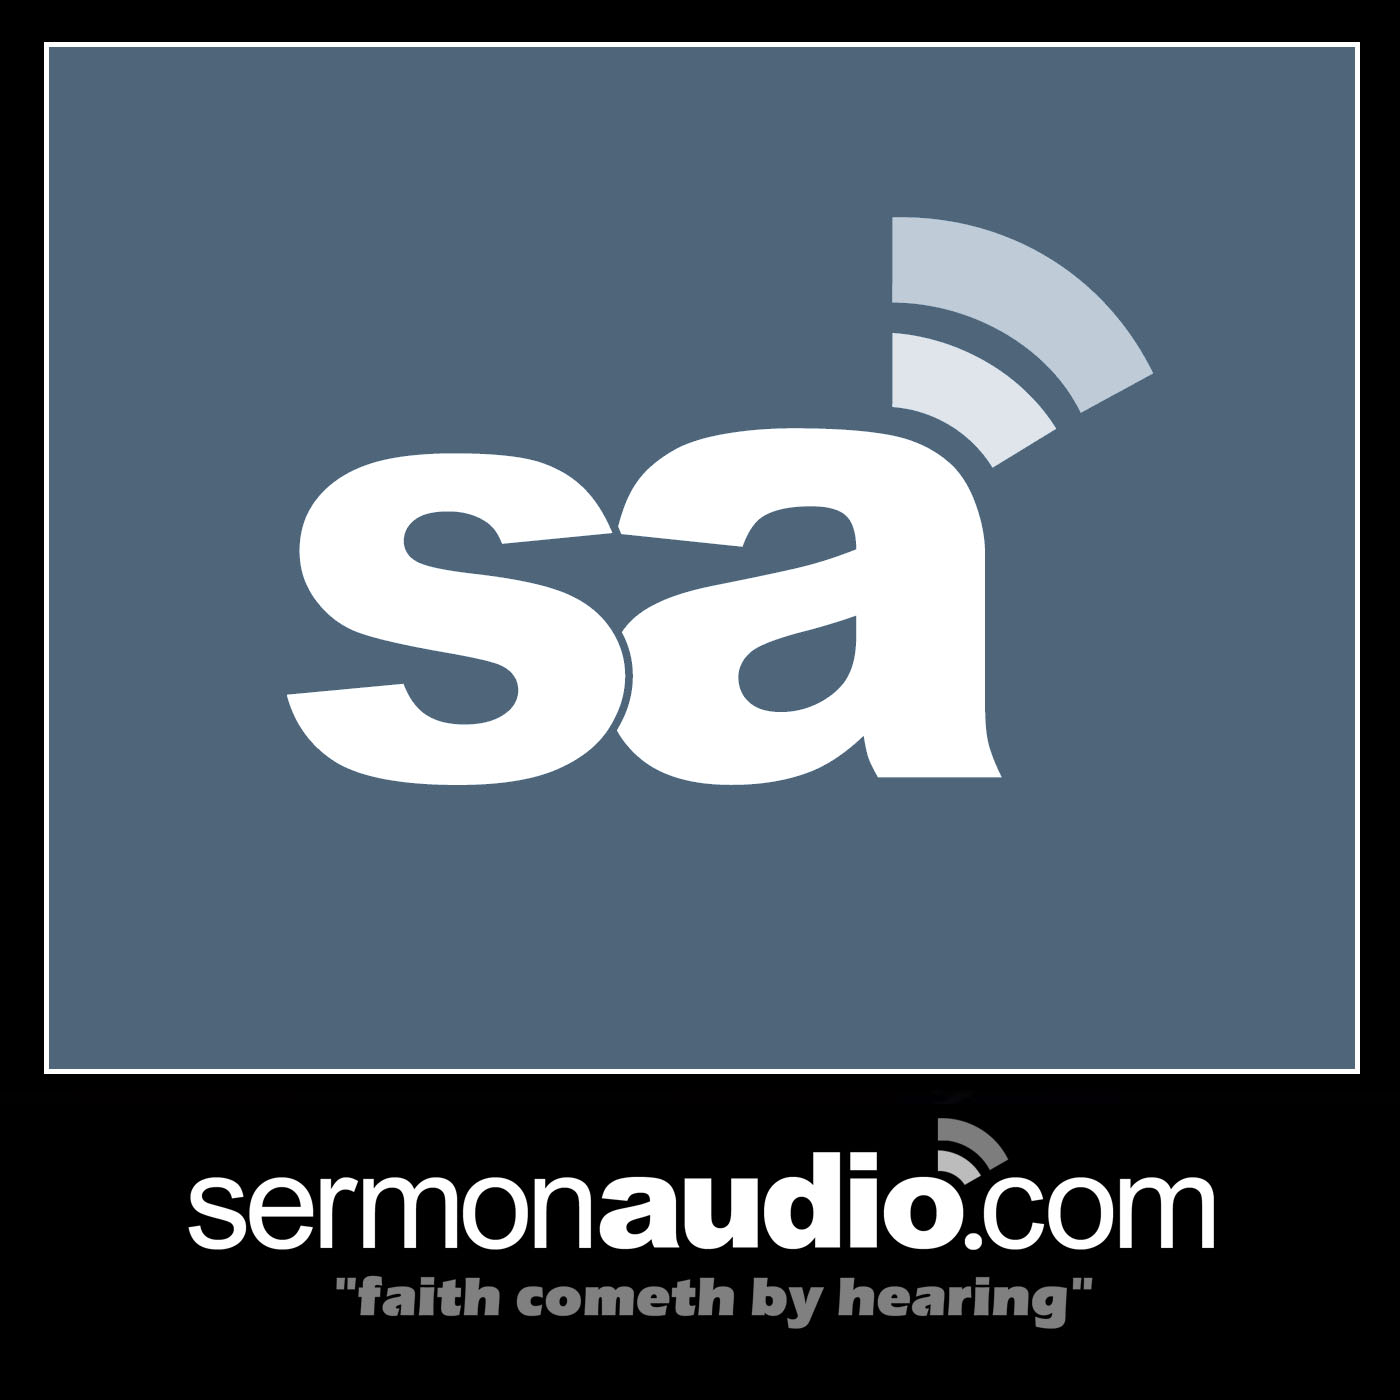 Fresh update on "paul w." discussed on Evangelism on SermonAudio